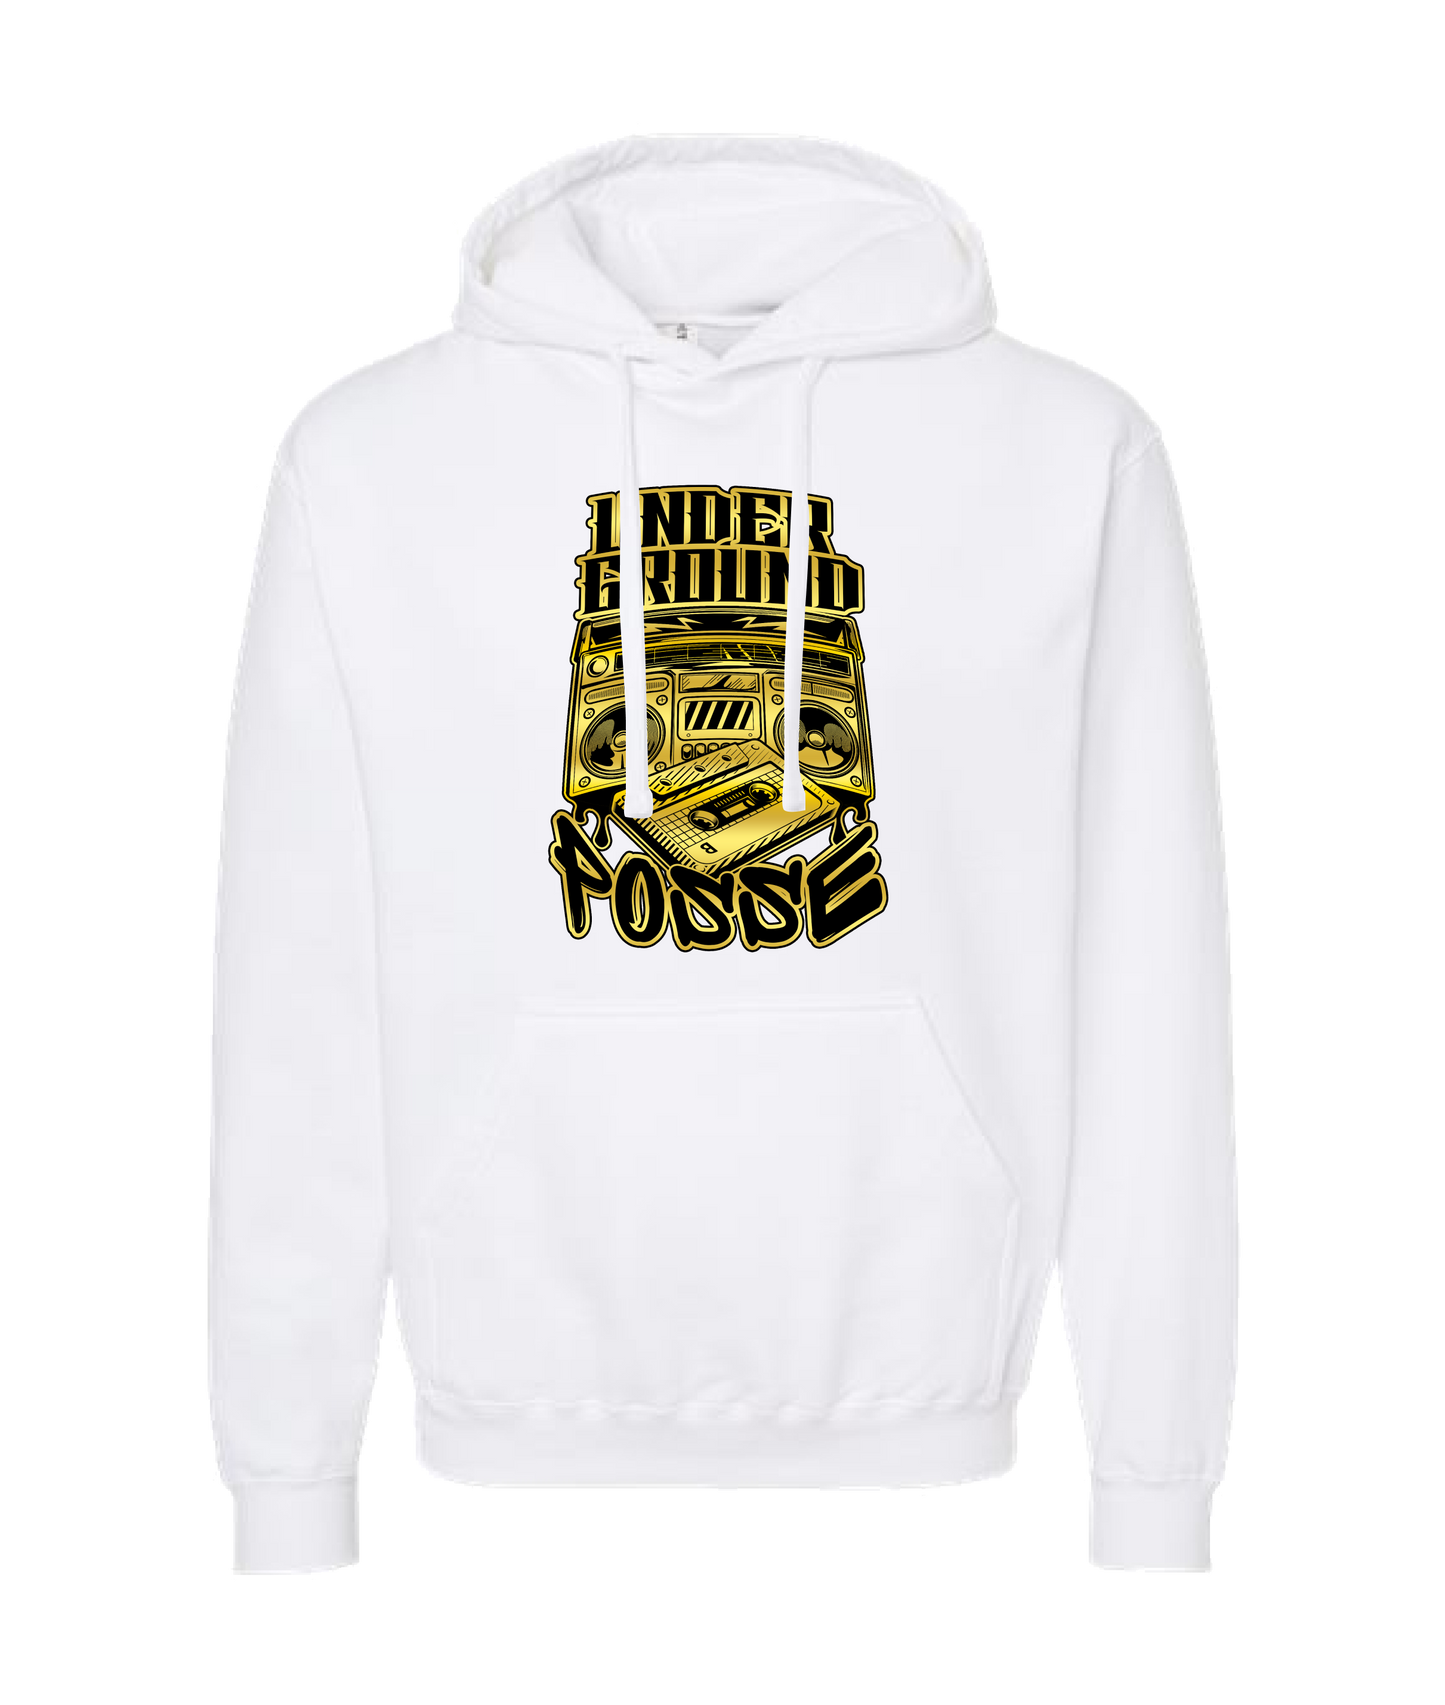 The Posse Store - UGP - White Hoodie